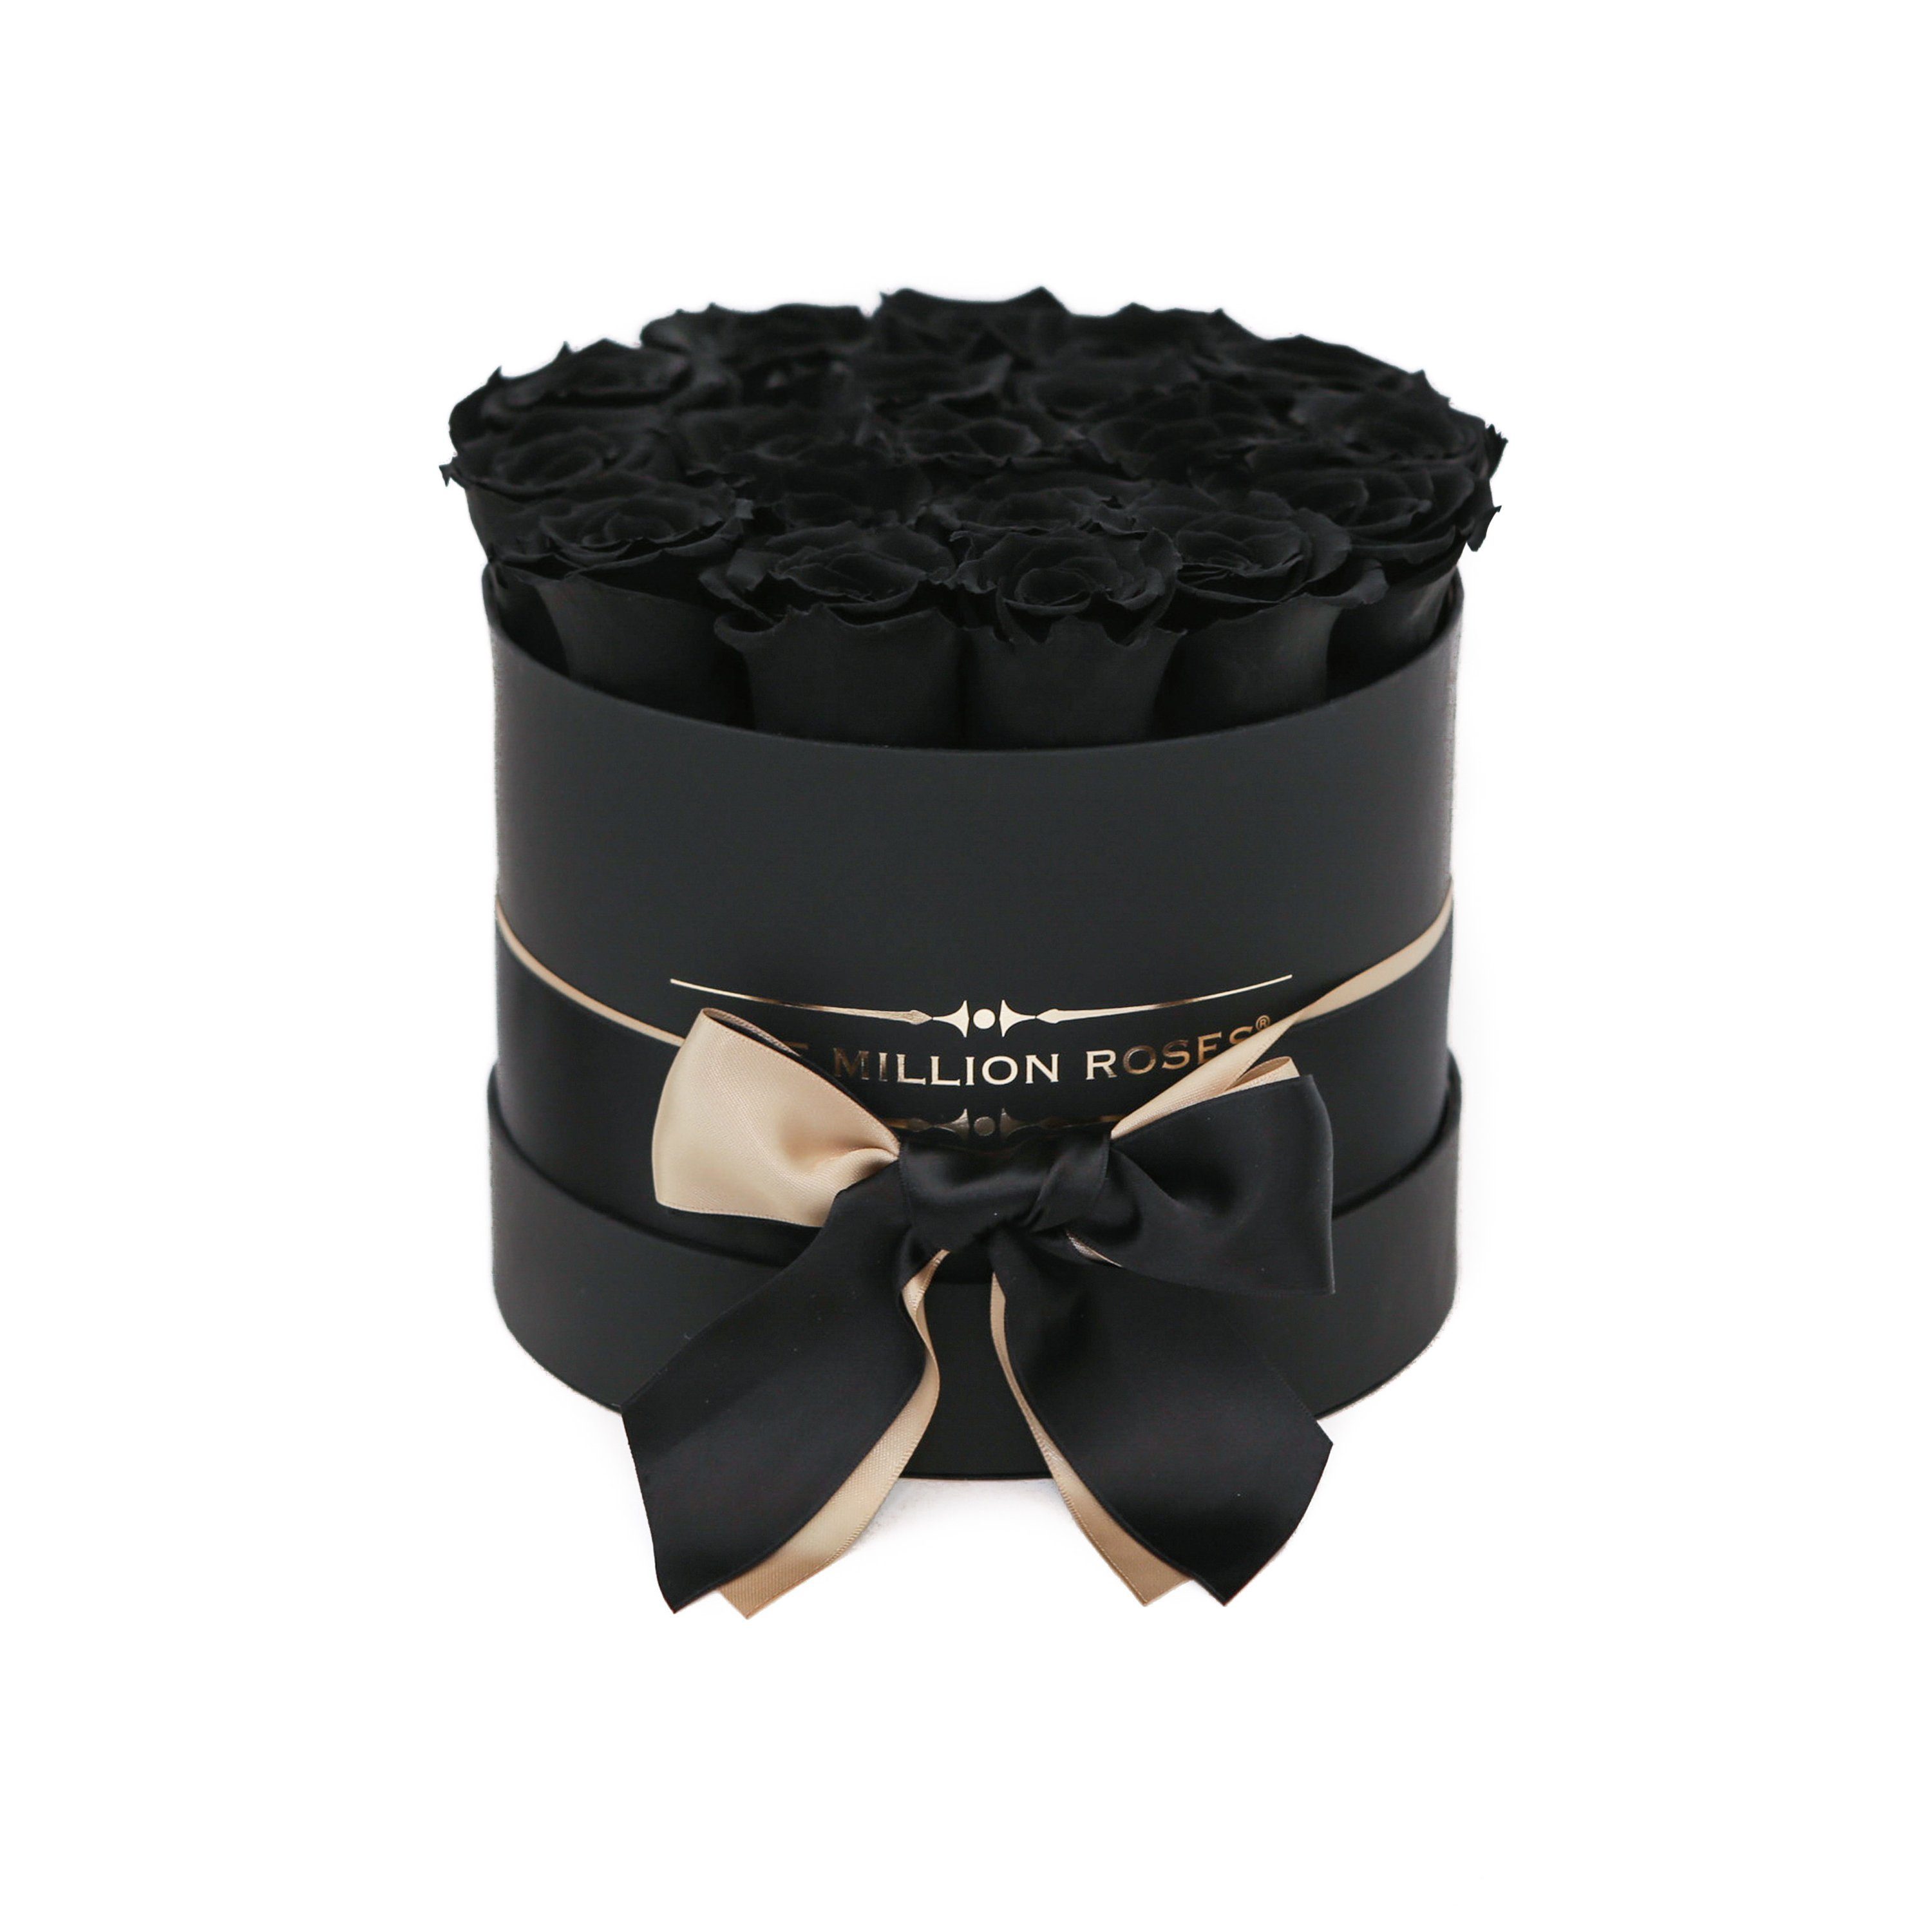 classic round box - black - black roses black eternity roses - the million roses